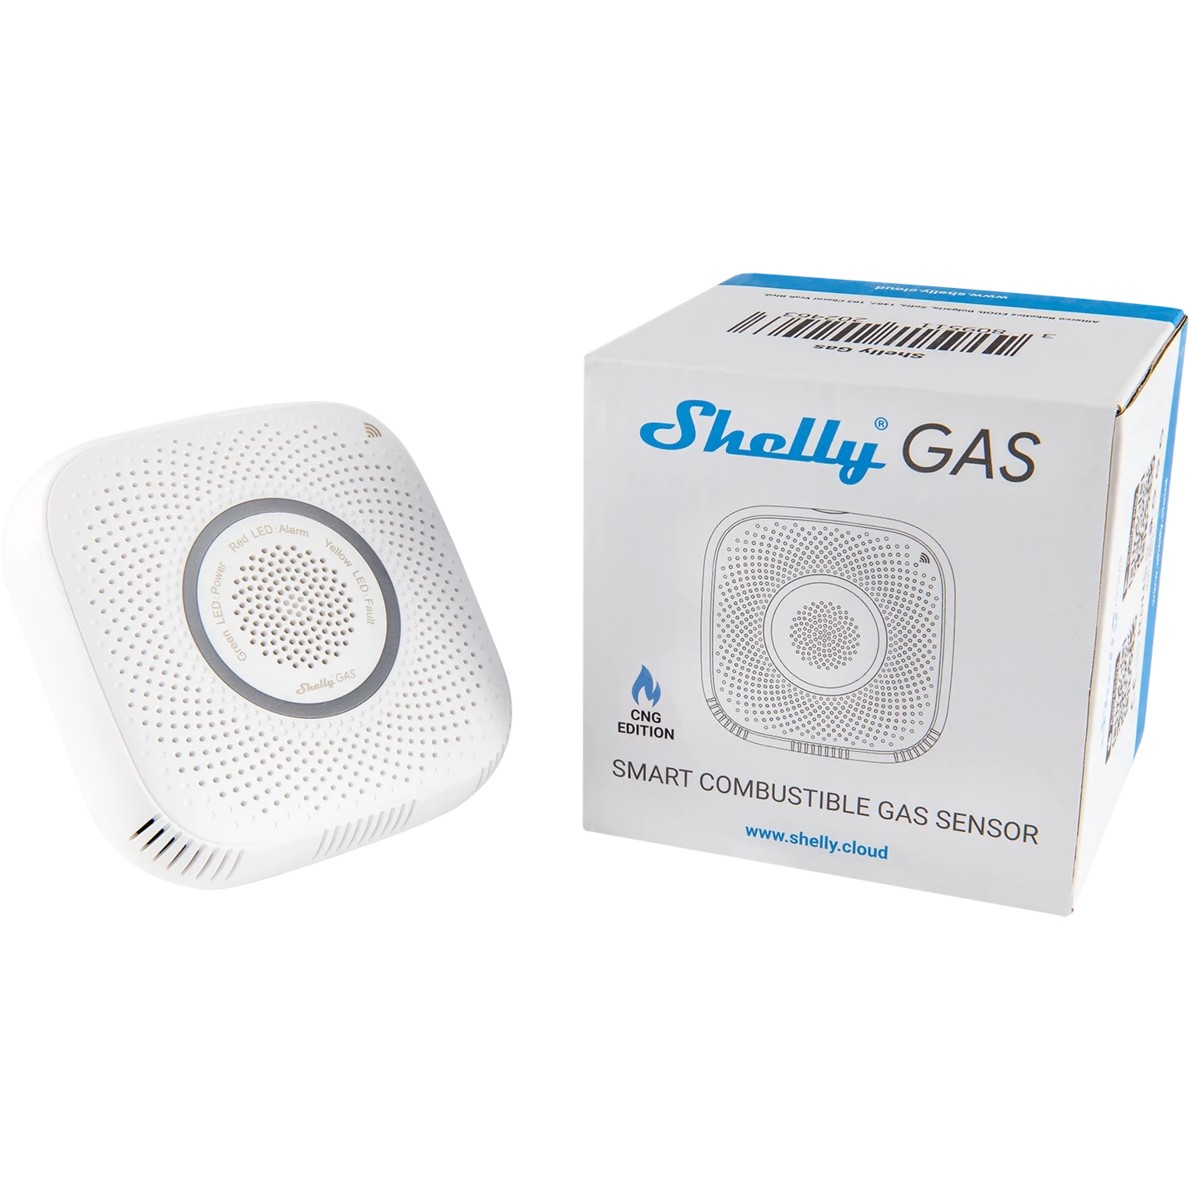 Shelly Shelly_Gas_LPG, Smart Home Sensoren, Shelly Gas  (BILD3)